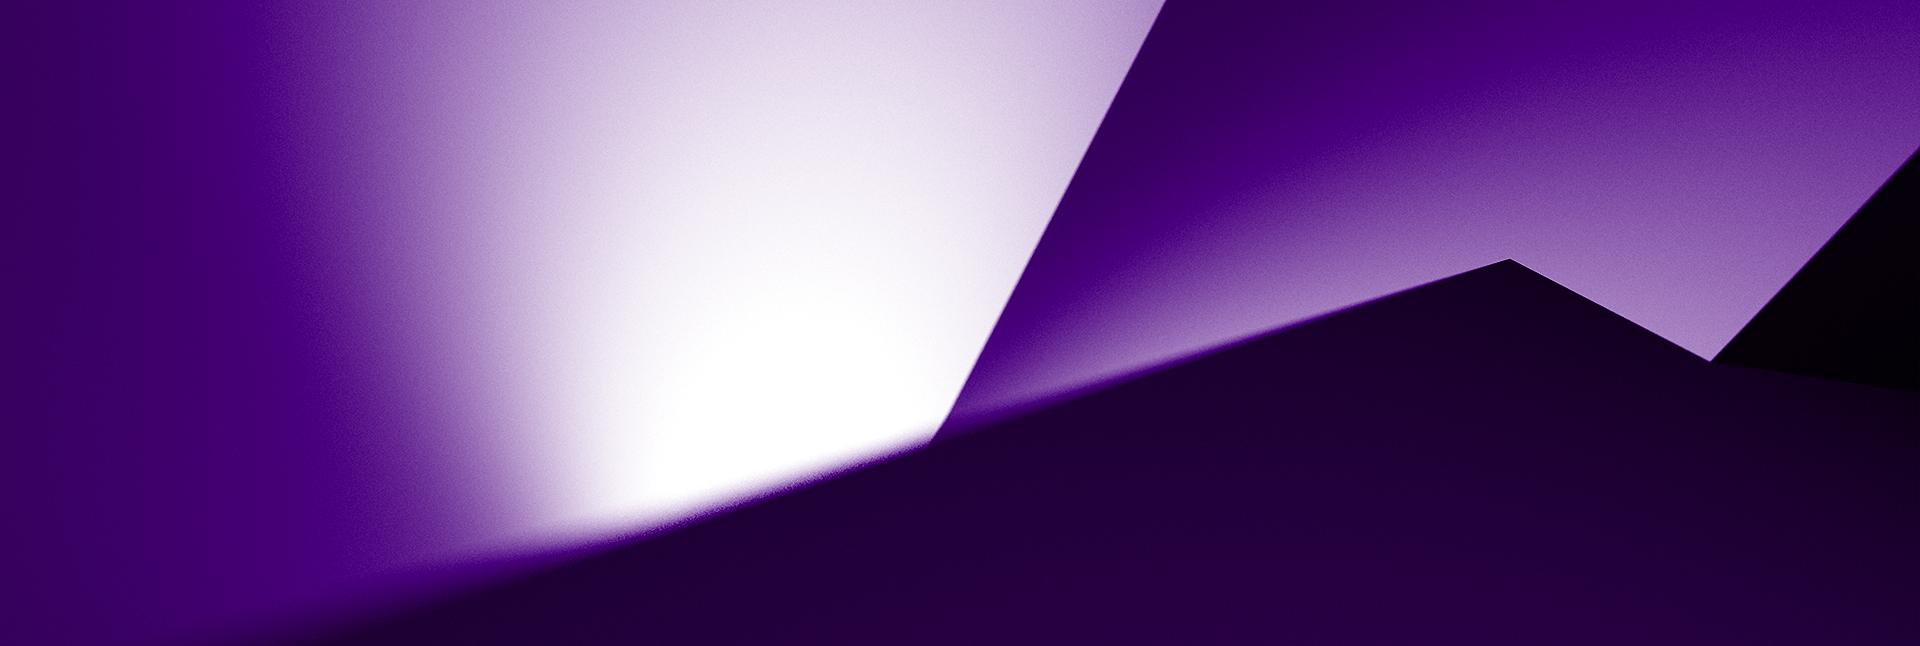 rra-background-purple-7.jpg